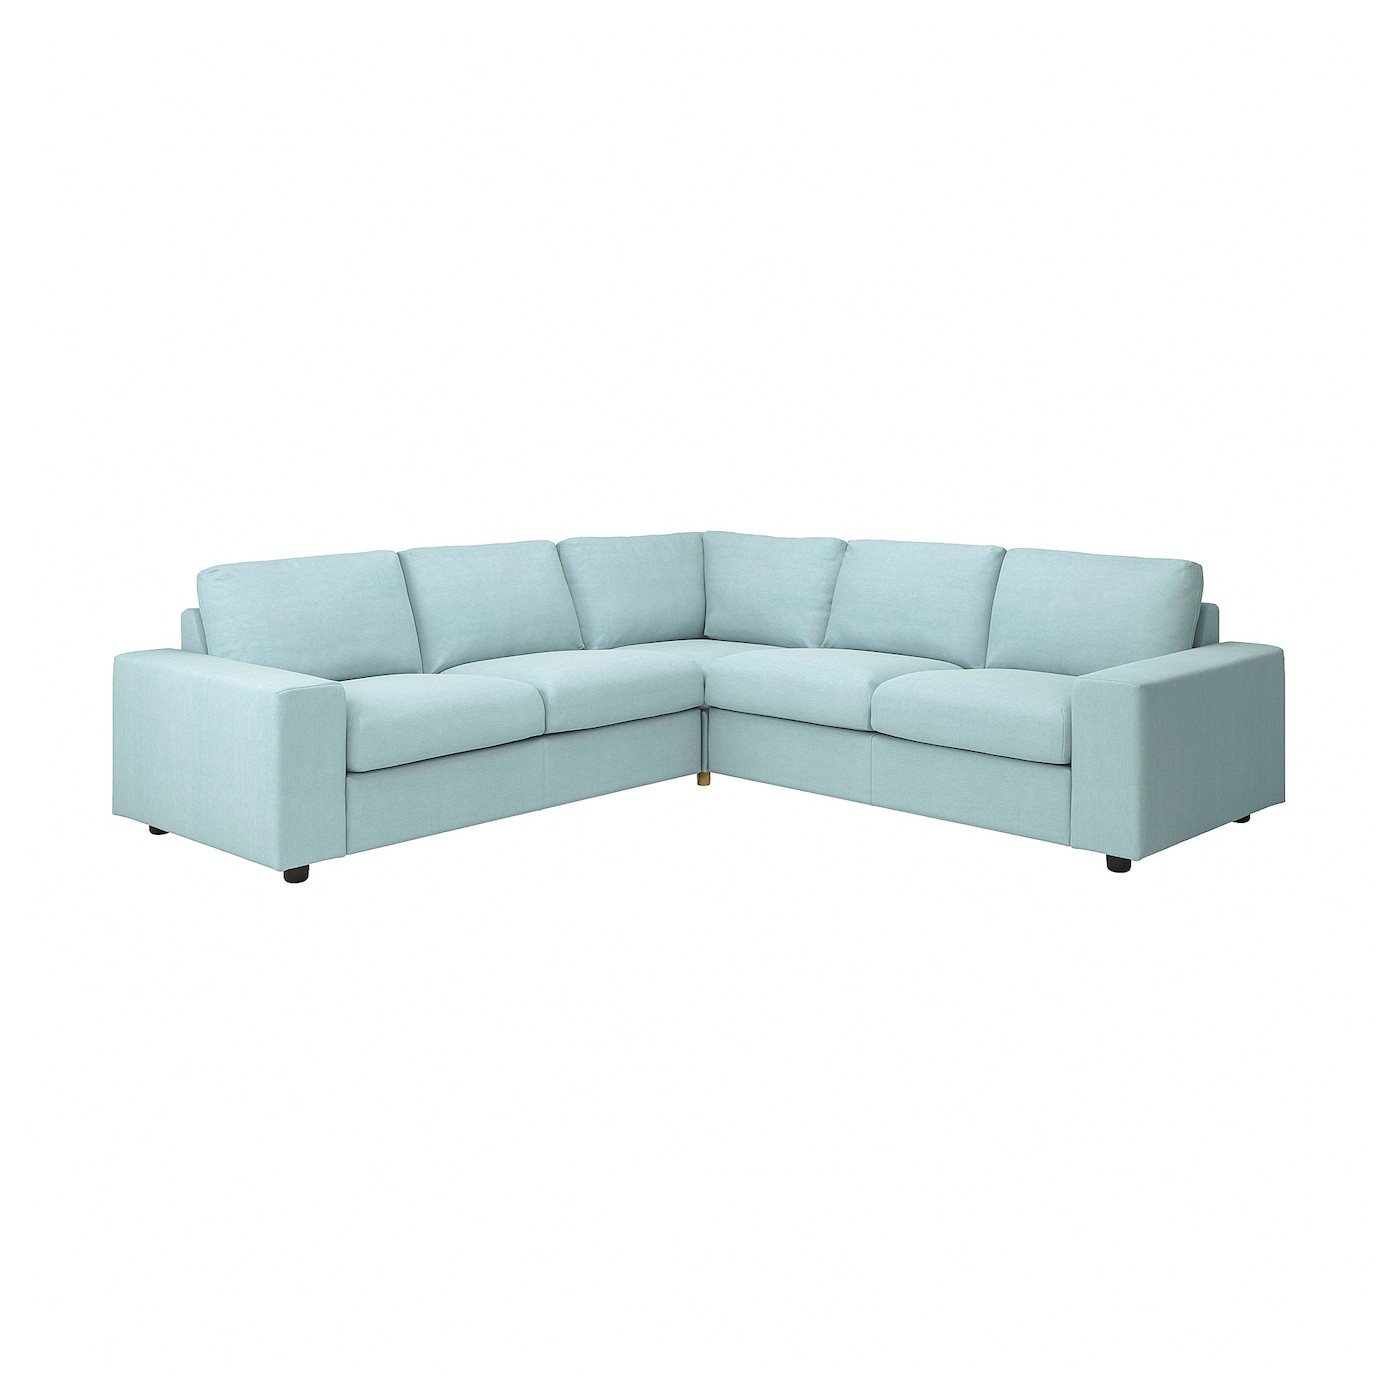 VIMLE Cover for corner sofa, 4-seat